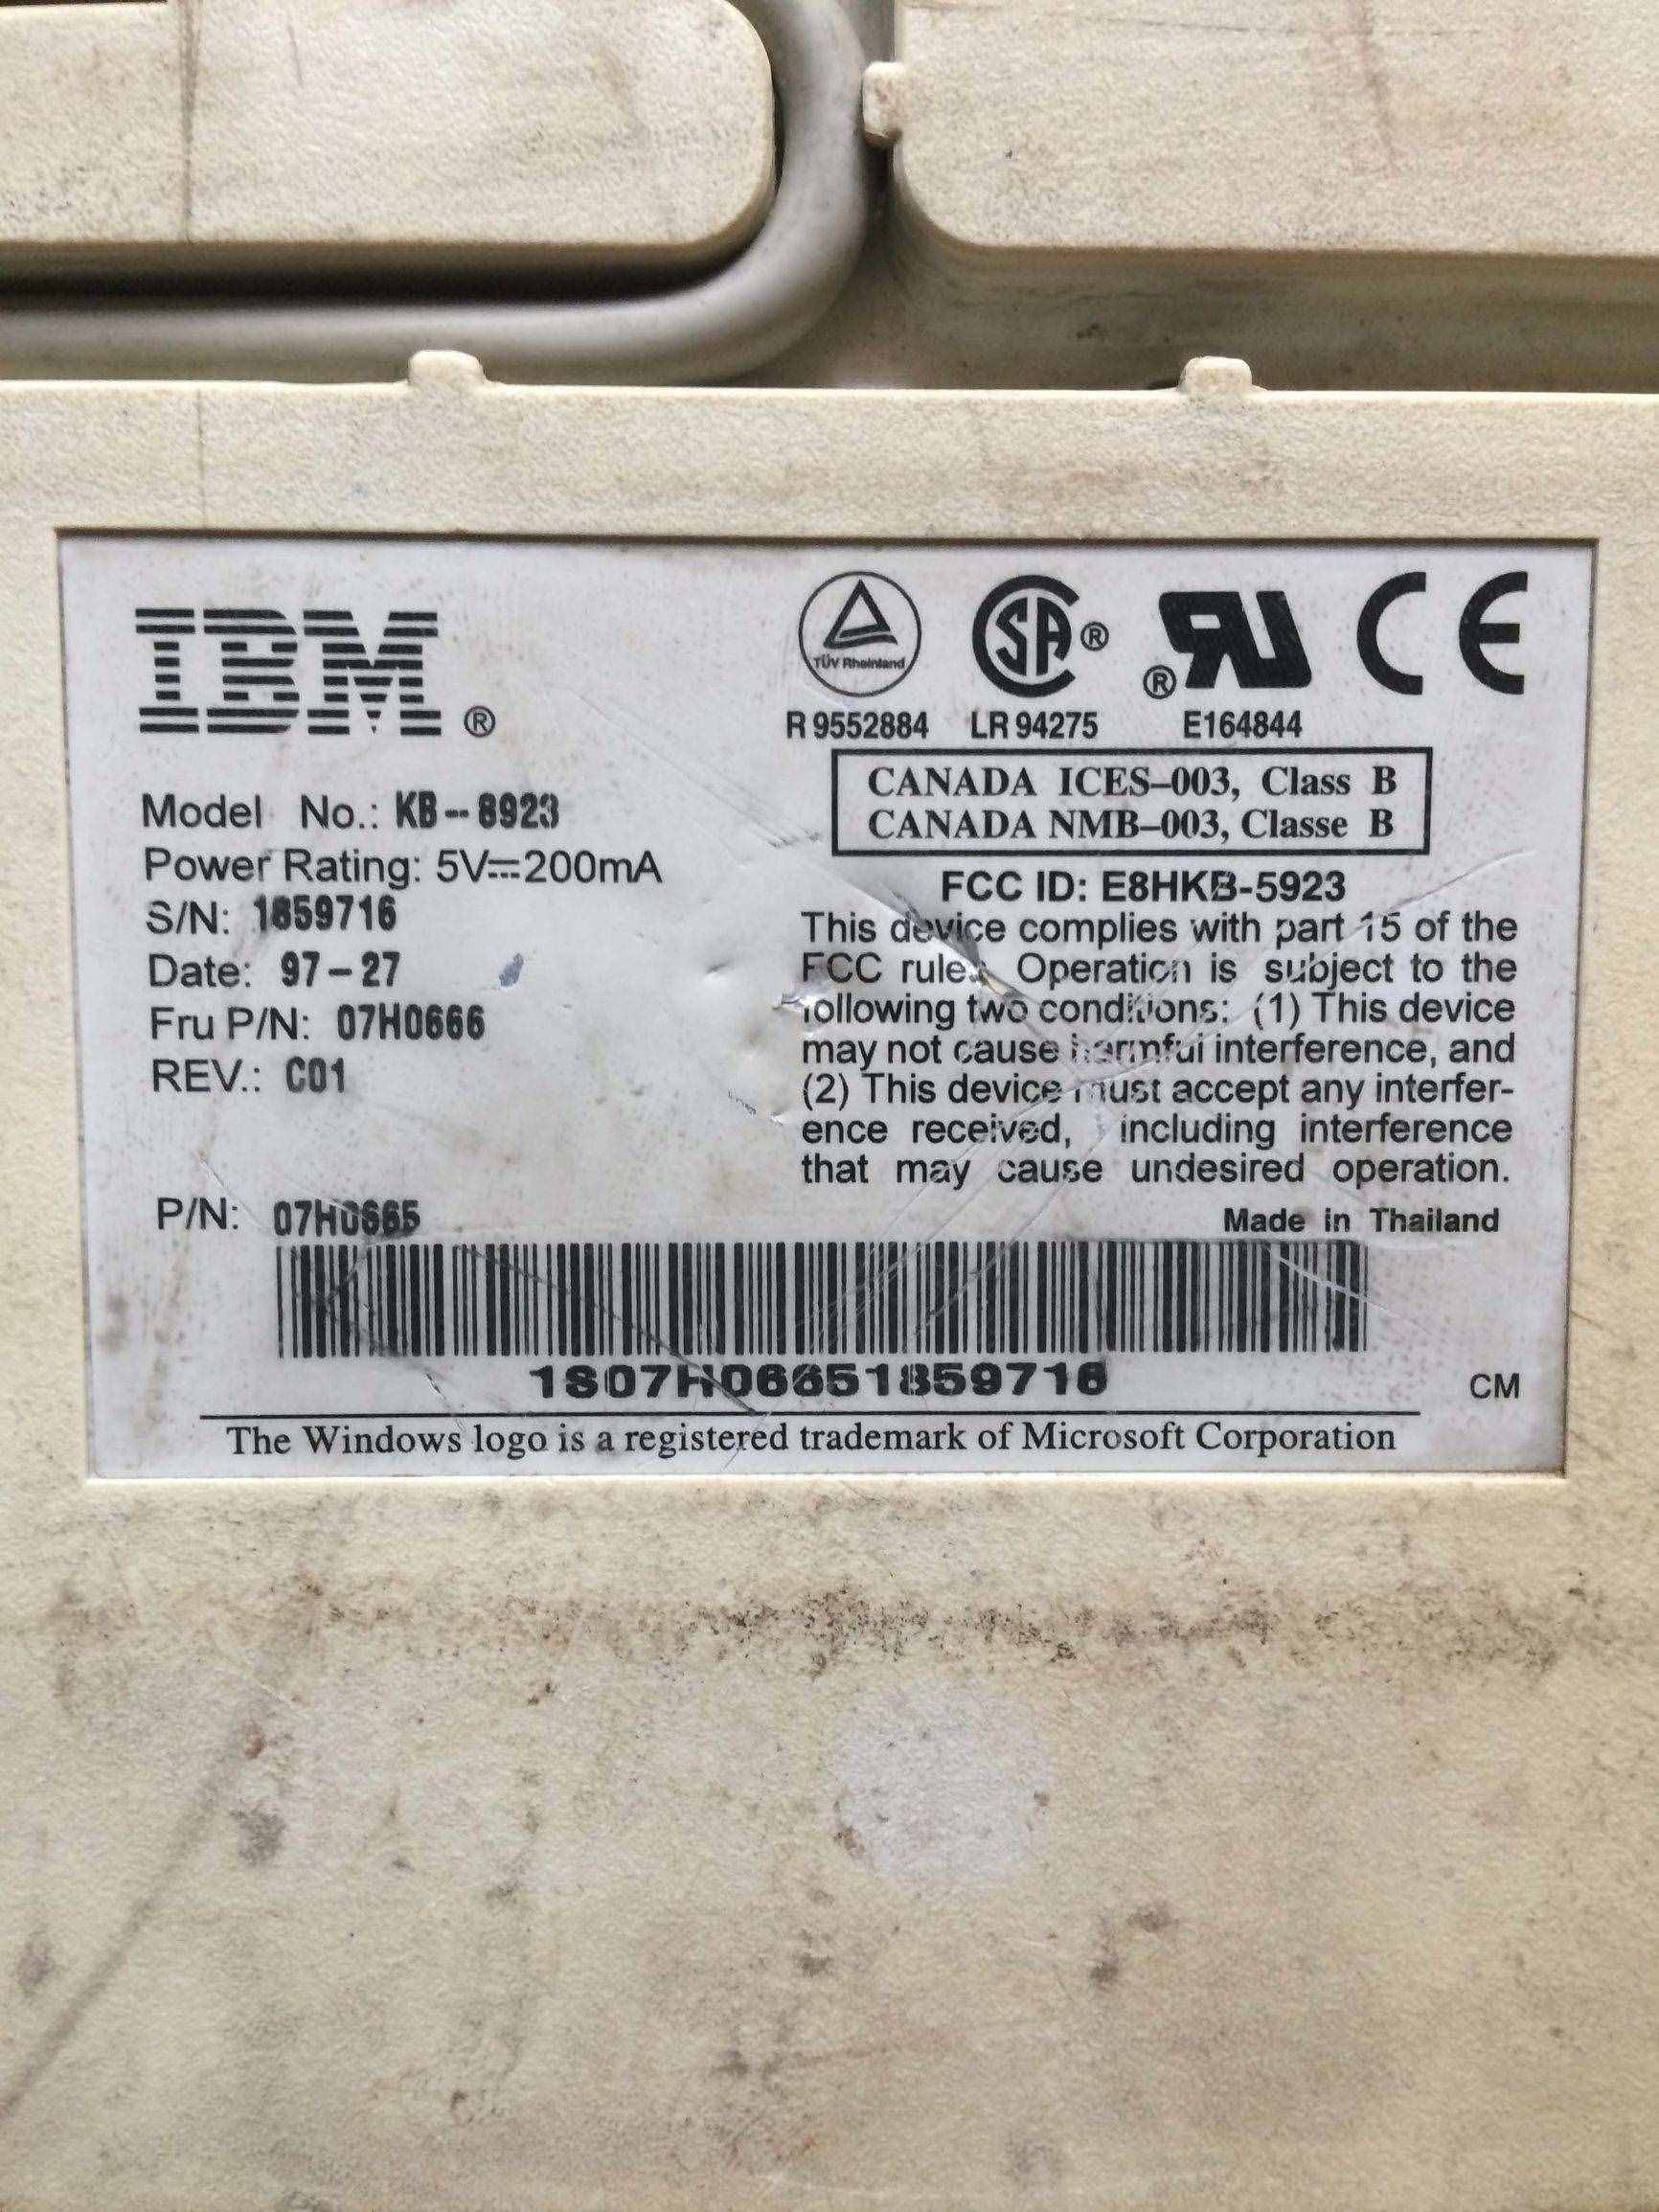 1997年的IBM台式机能进IBM博物馆吗？